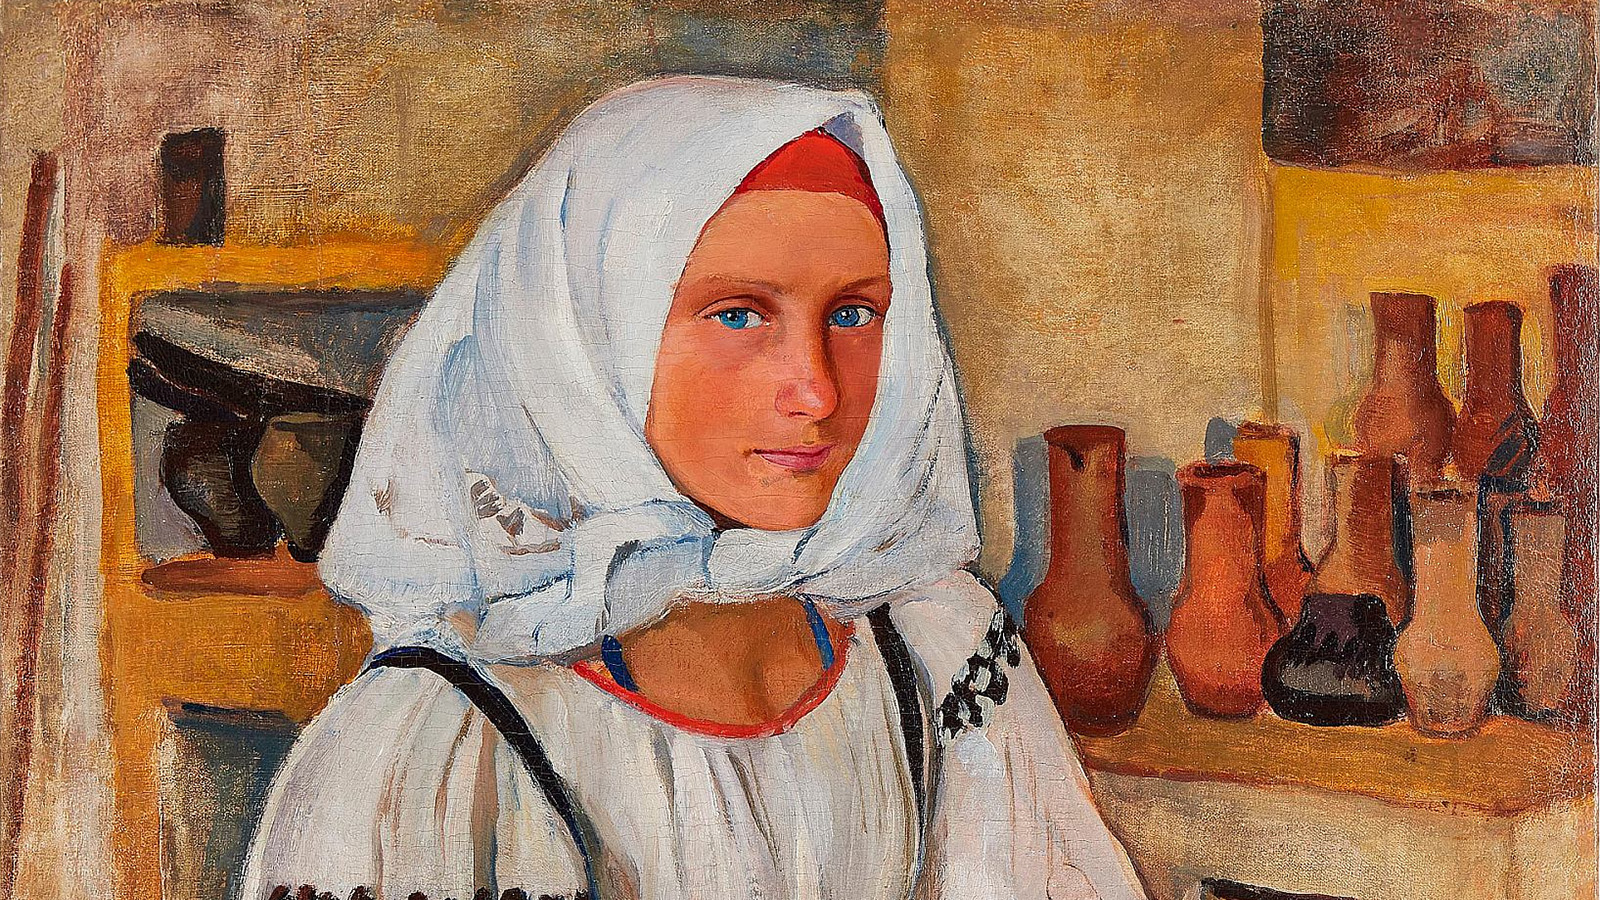 <p>Фрагмент картины &laquo;Портрет молодой крестьянки&raquo;, Серебрякова Зинаида, 1915 год</p>